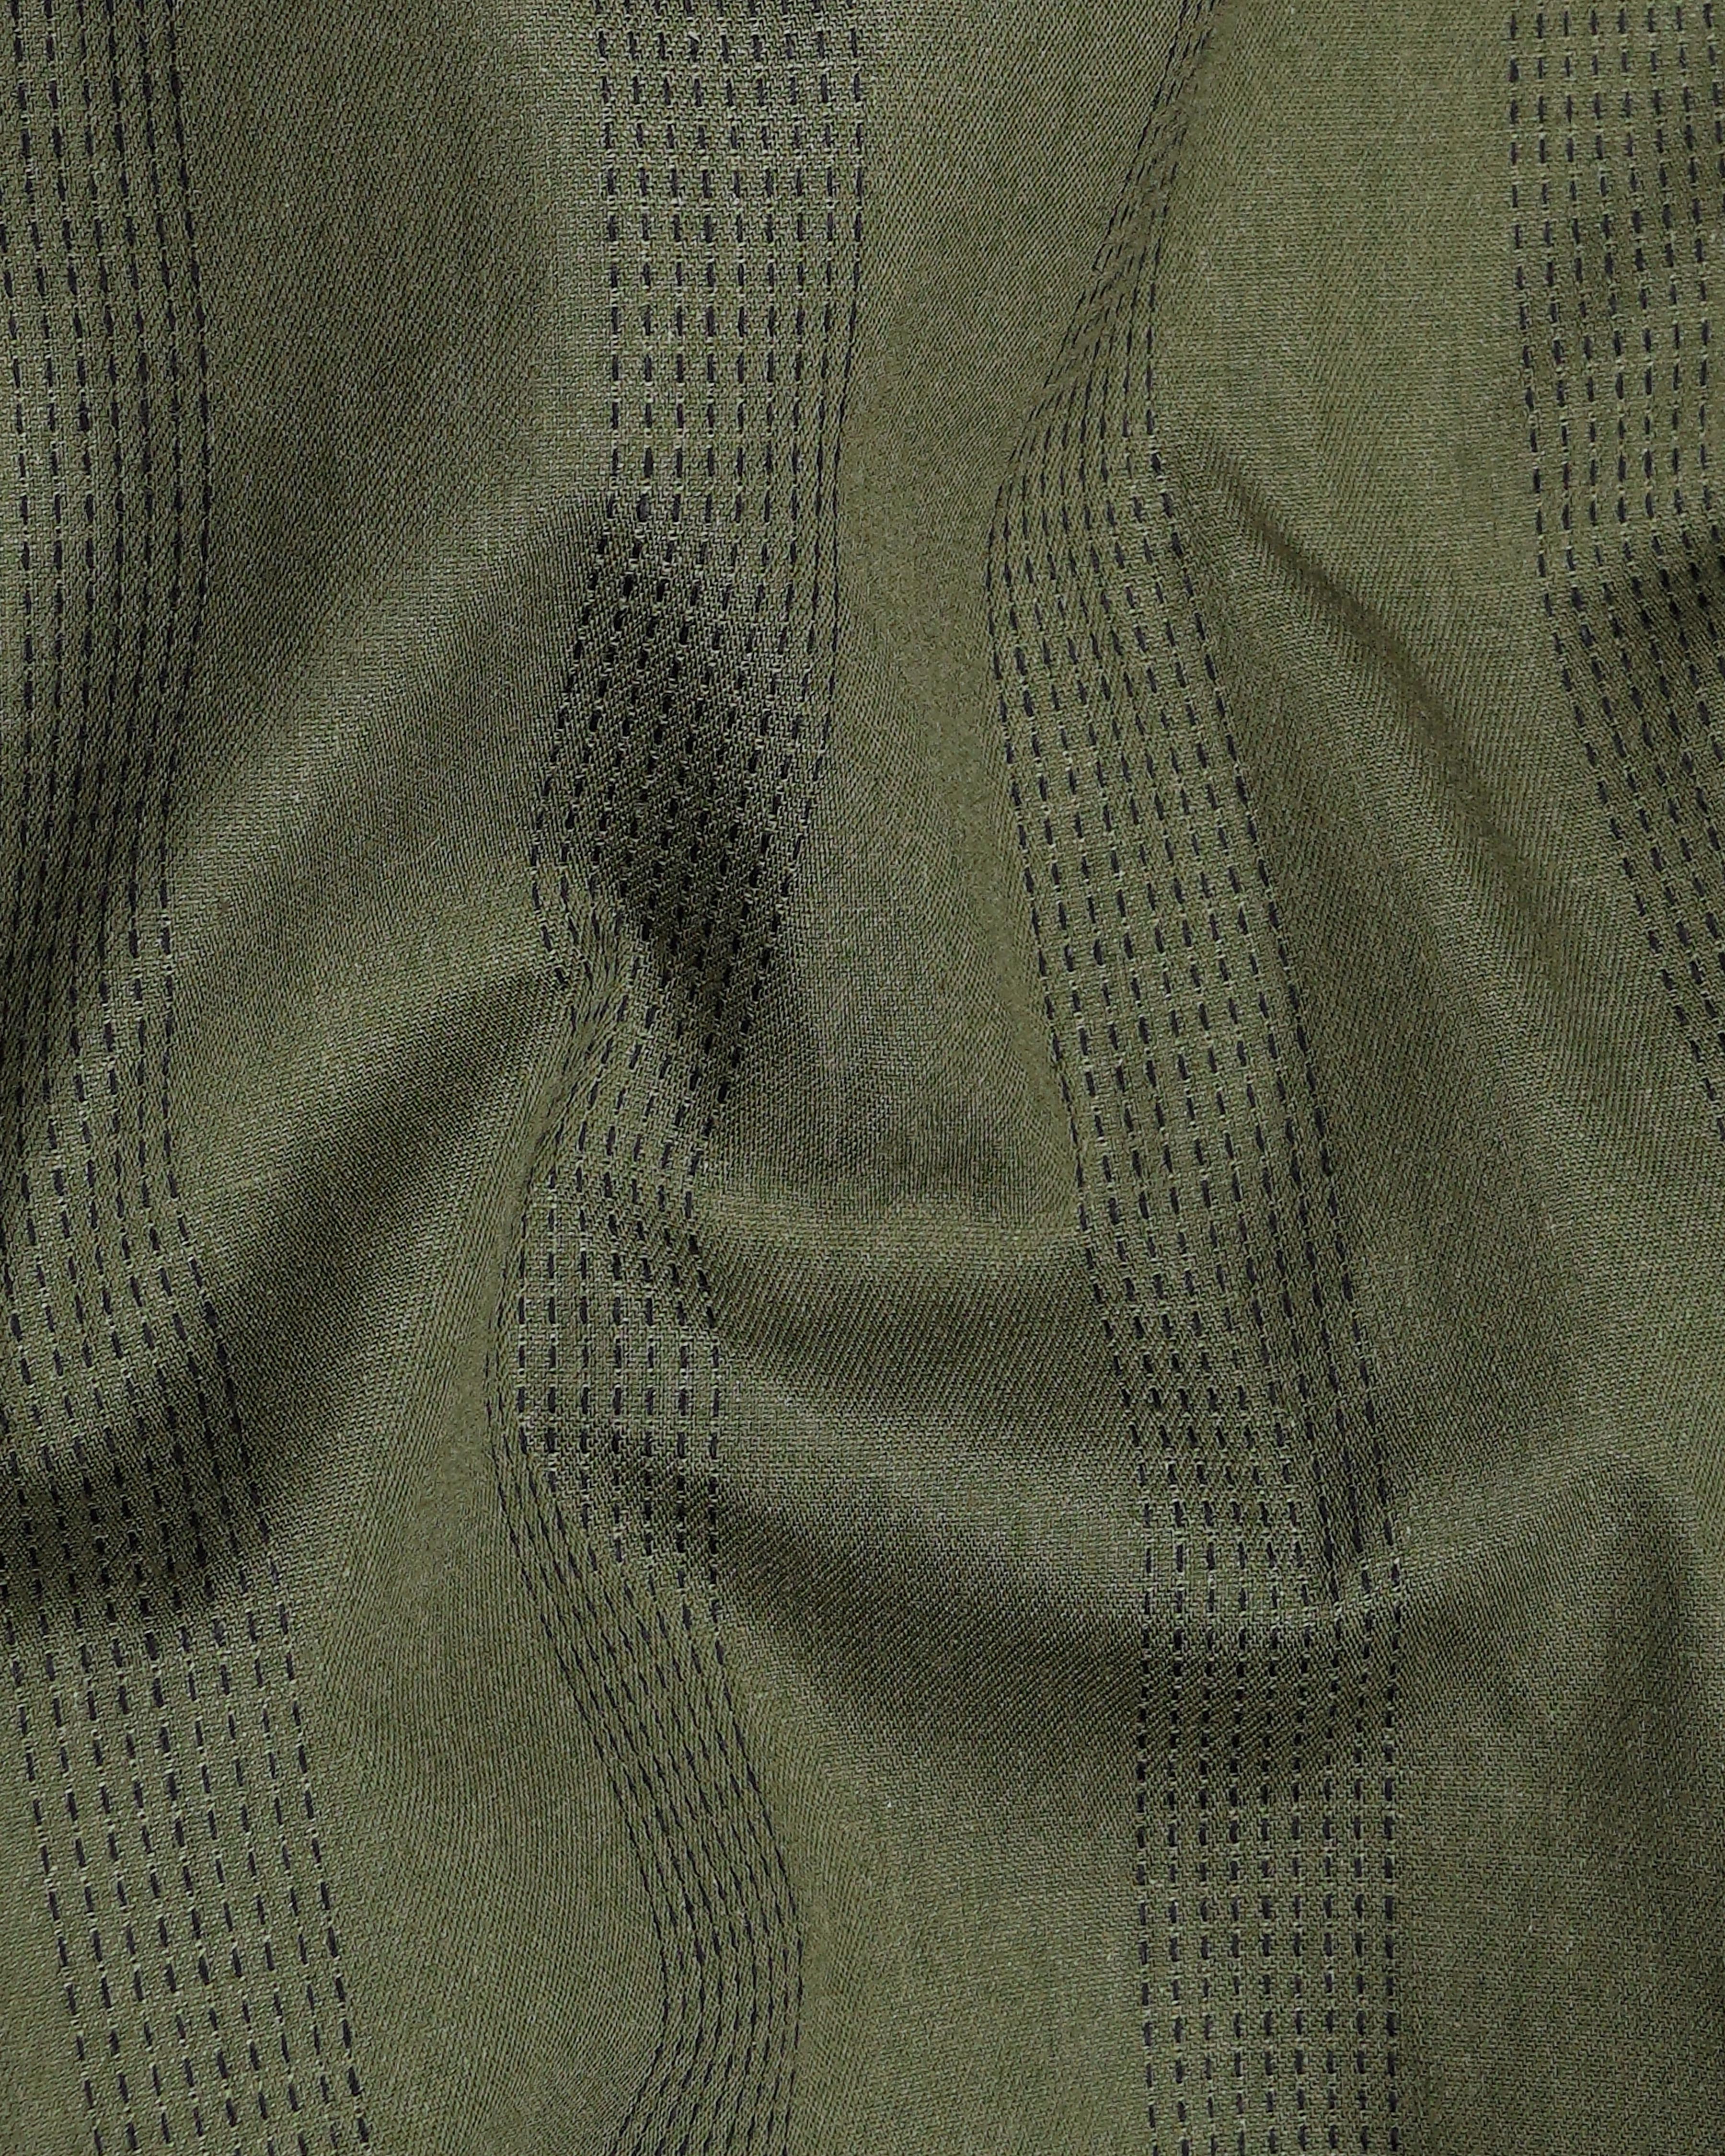 Fuscous Green and Black Striped Dobby Textured Giza Cotton Shirt 8213-BLK -38,8213-BLK -H-38,8213-BLK -39,8213-BLK -H-39,8213-BLK -40,8213-BLK -H-40,8213-BLK -42,8213-BLK -H-42,8213-BLK -44,8213-BLK -H-44,8213-BLK -46,8213-BLK -H-46,8213-BLK -48,8213-BLK -H-48,8213-BLK -50,8213-BLK -H-50,8213-BLK -52,8213-BLK -H-52